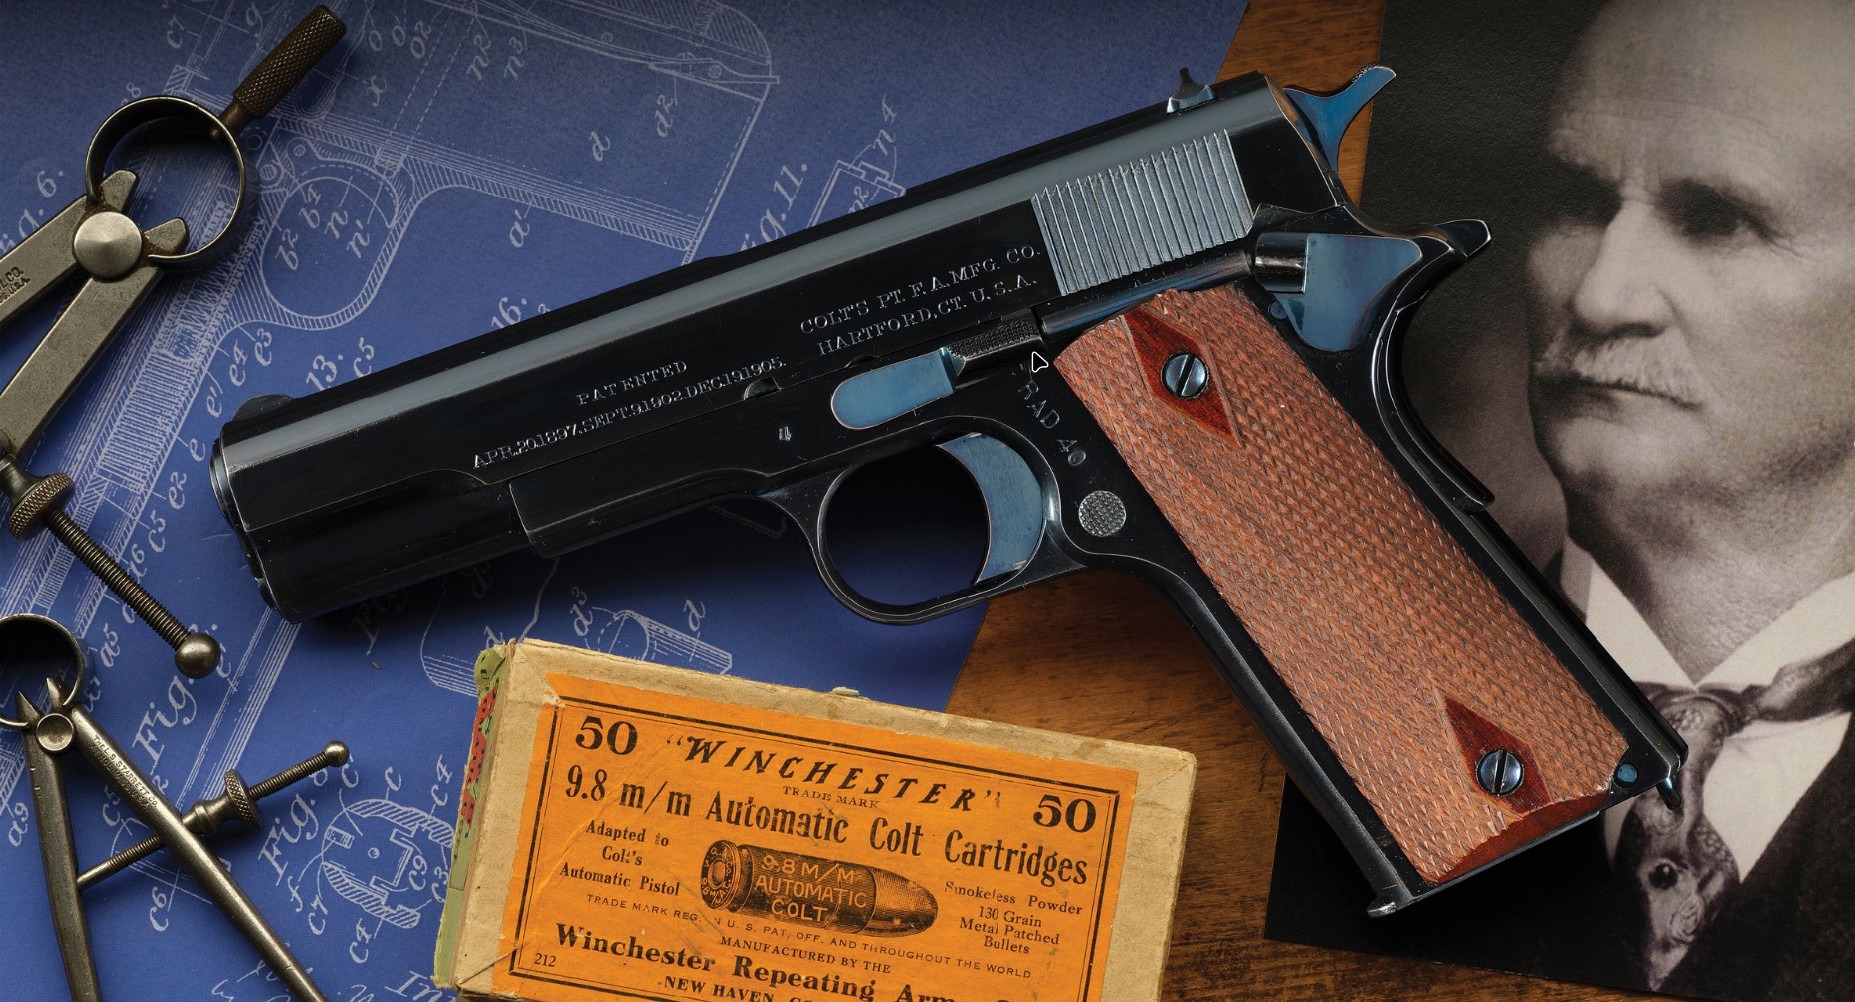 Colt M1910 experimental pistol